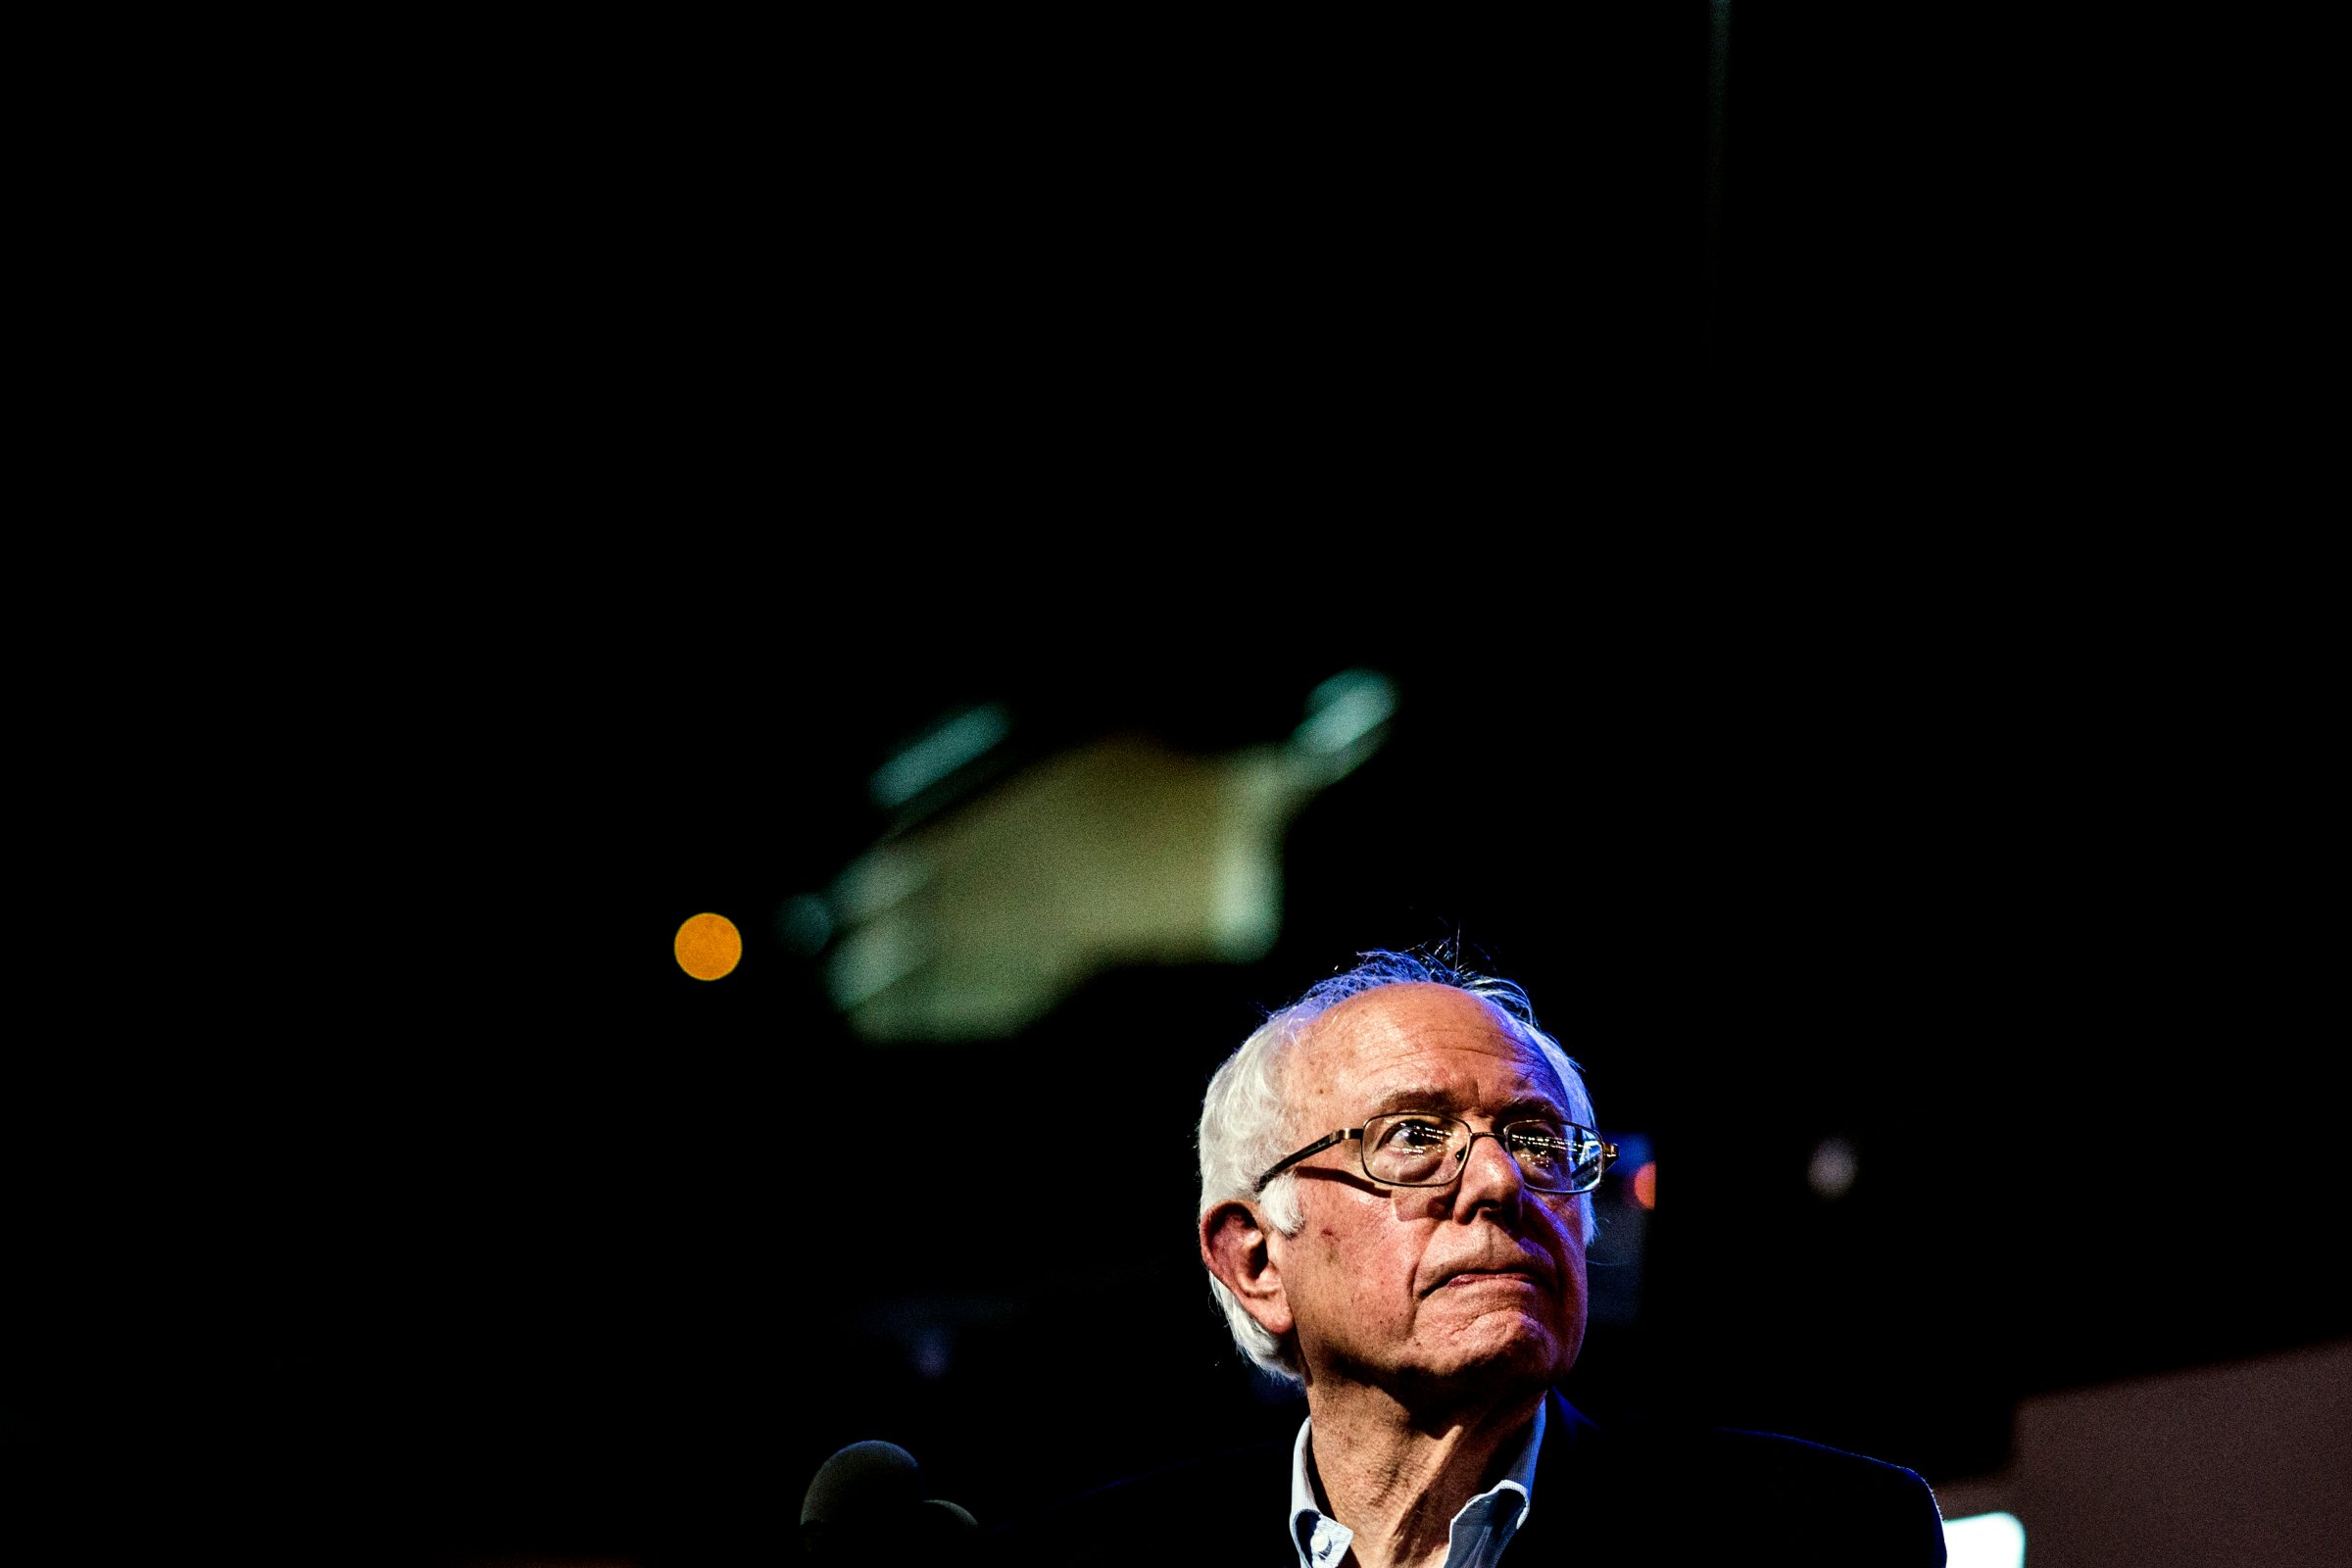 Vermont Sen. Bernie Sanders speaks at the Democratic National Convention on July 25, 2016, in Philadelphia.